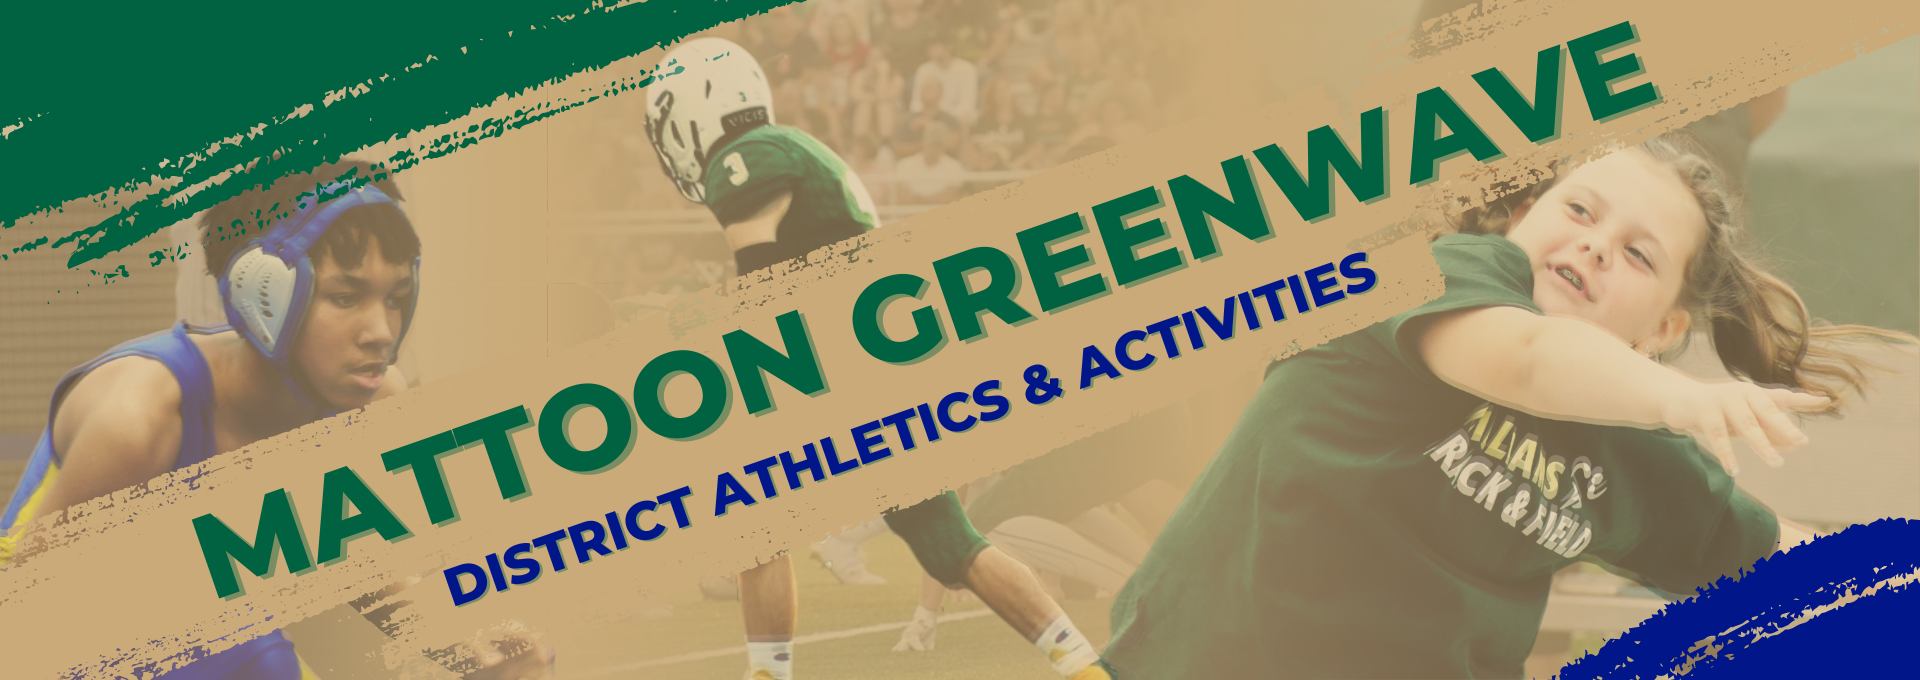 Mattoon Greenwave District Athletics & Activities